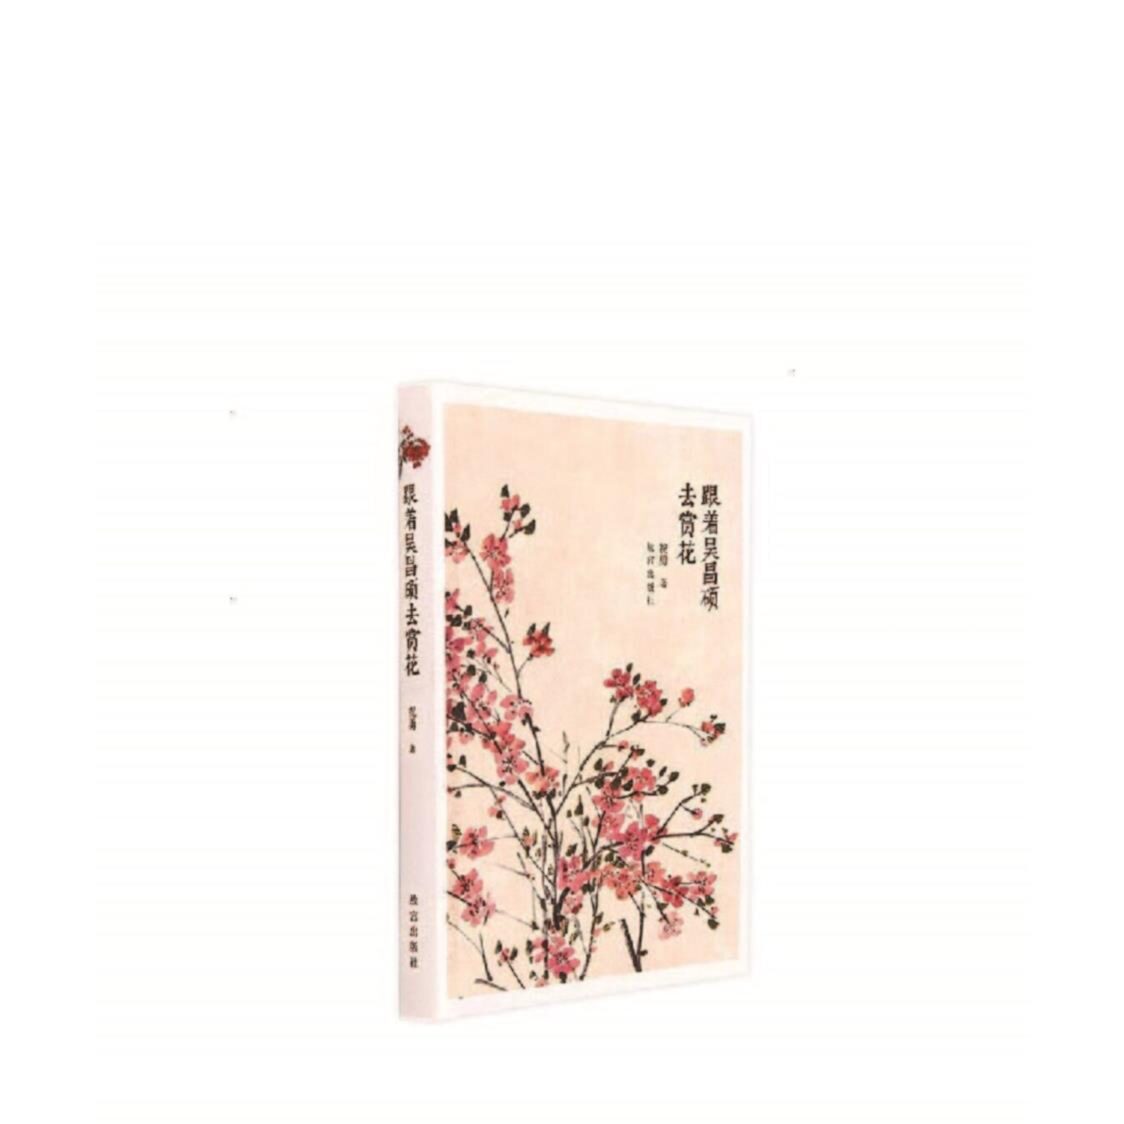 Xuan Culture  Lifestyle Flower Appreciation Book